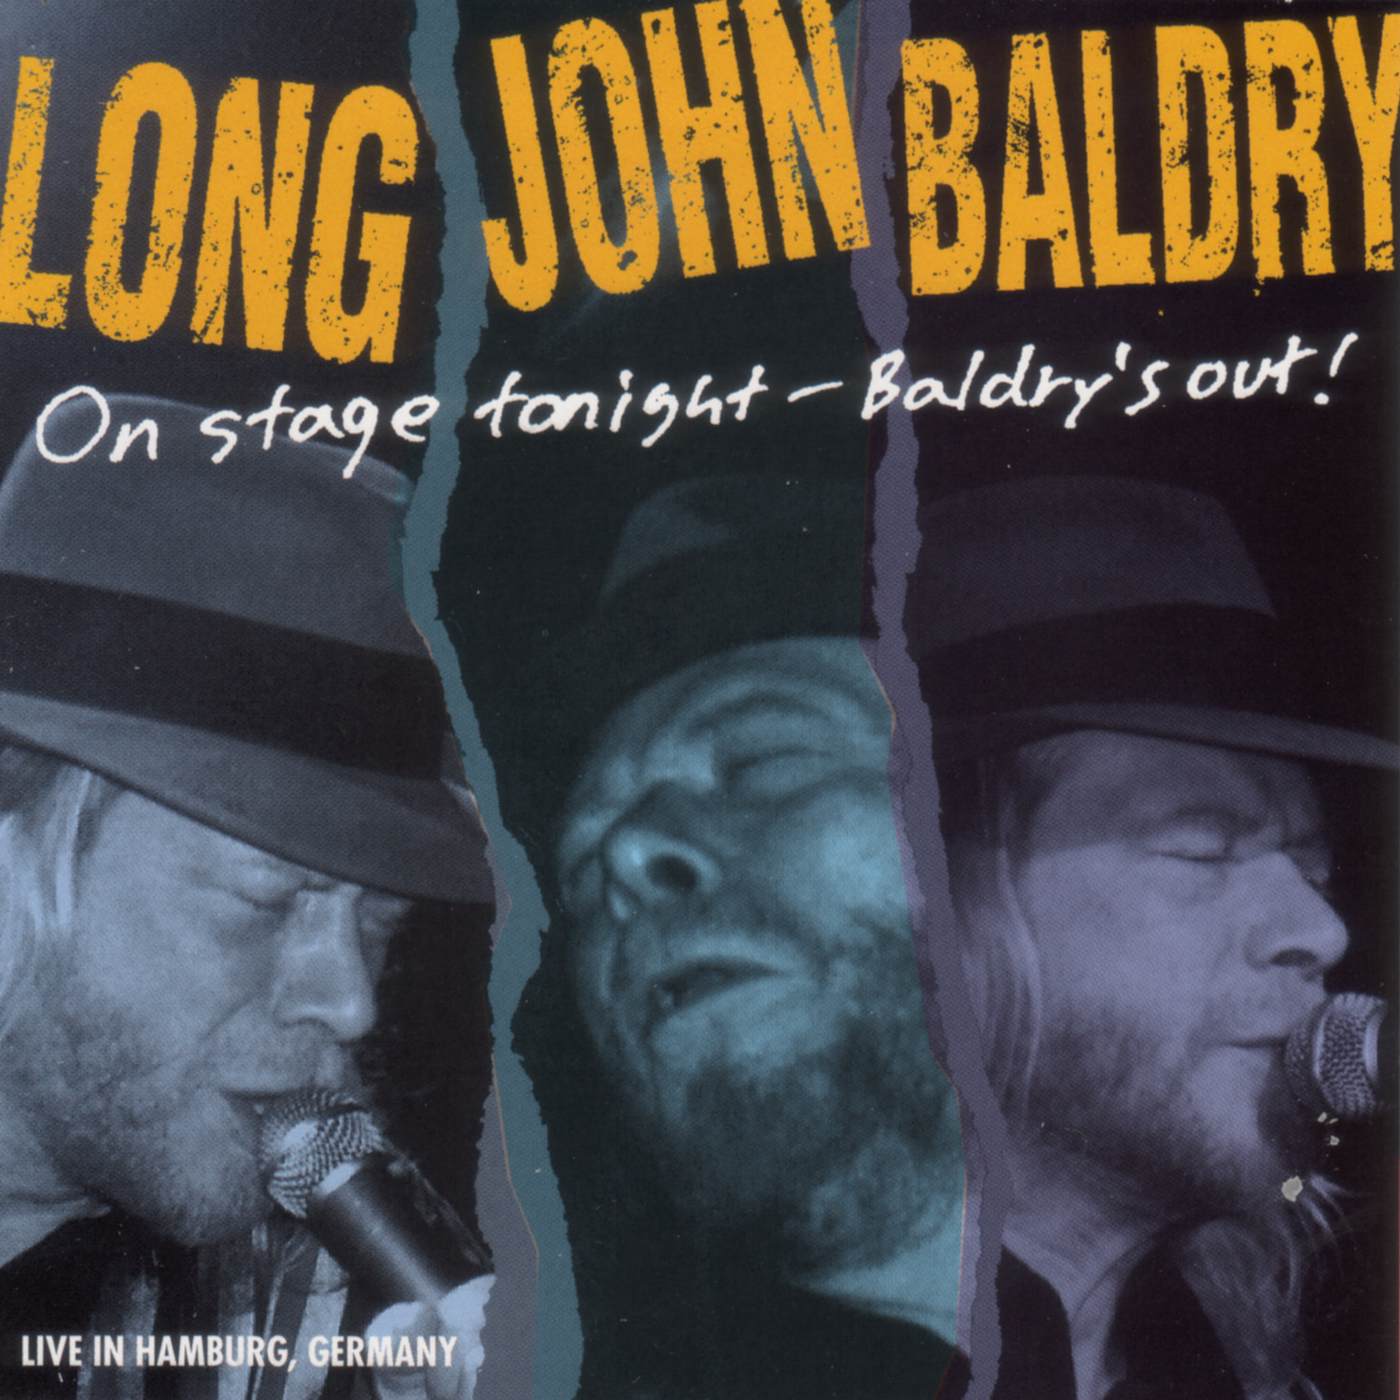 Long John Baldry On Stage Tonight: Baldry's Out CD